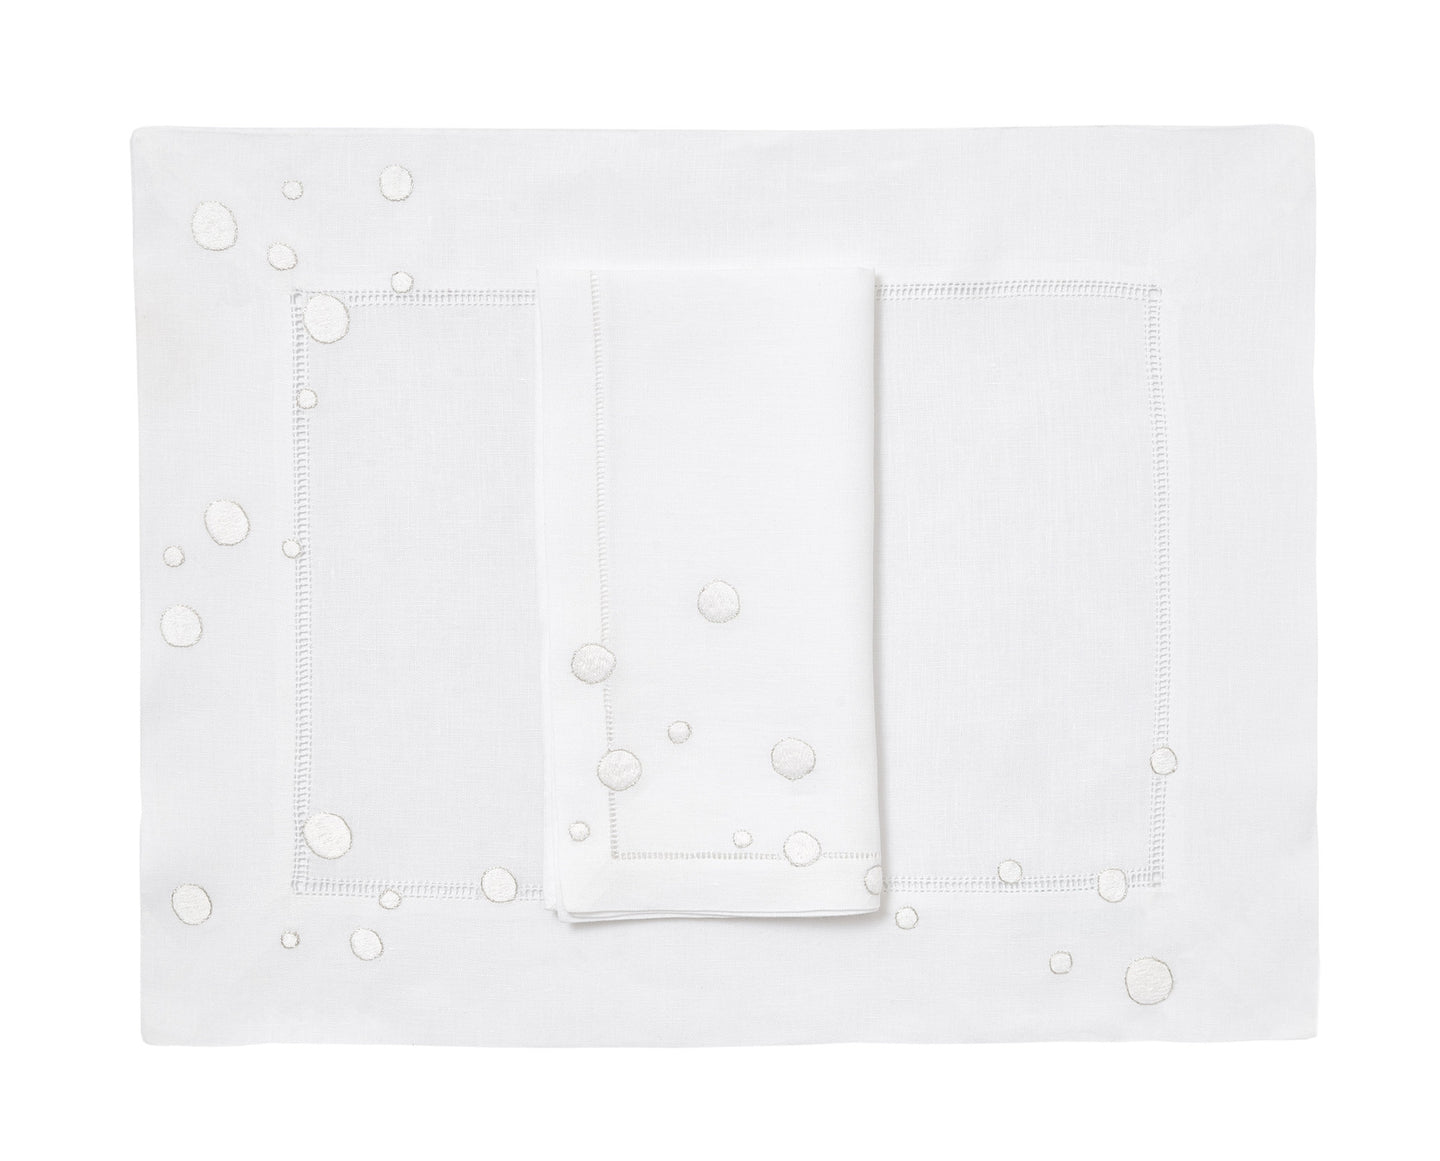 Confettis white Placemat/Napkin Set